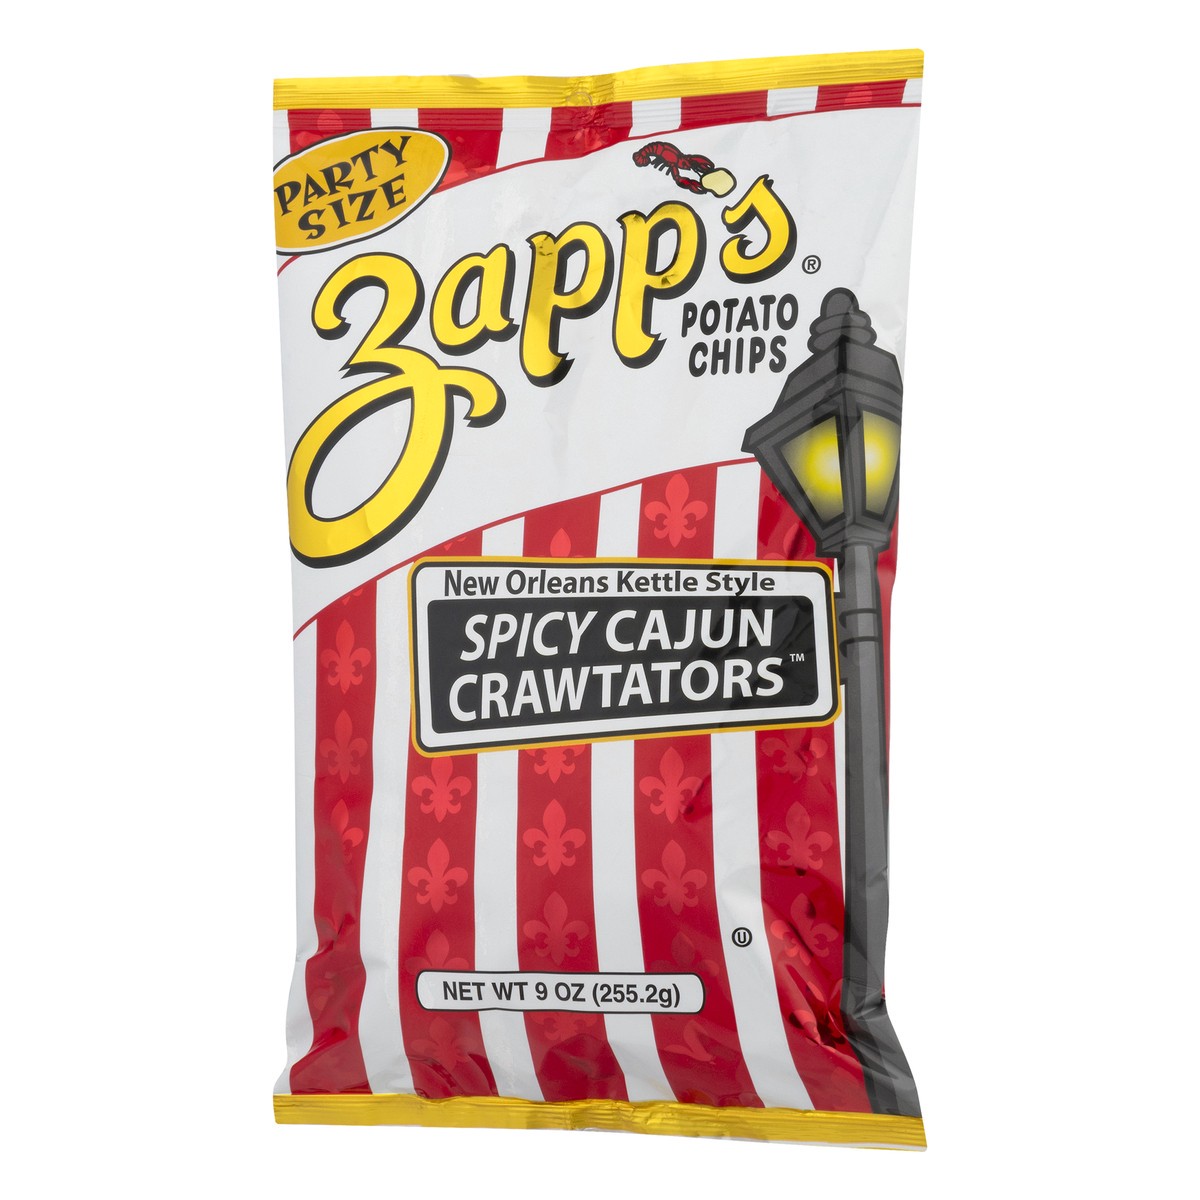 slide 5 of 9, Zapp's Party Size New Orleans Kettle Style Spicy Cajun Crawtators Potato Chips 9.0 oz, 9 oz